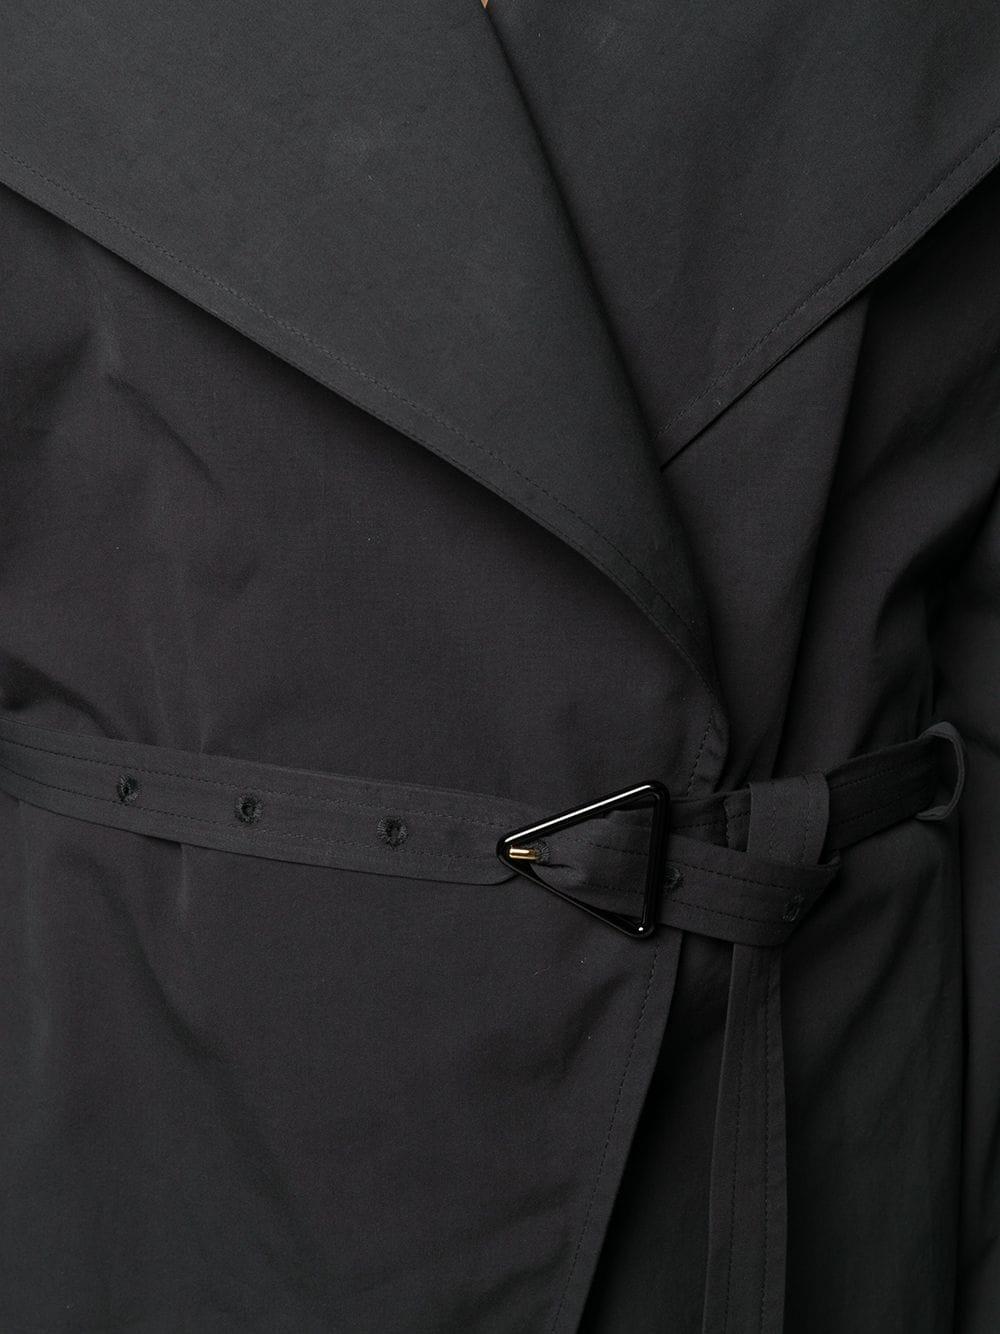 Bottega Veneta Cotton Belted Jumpsuit in Black - Lyst